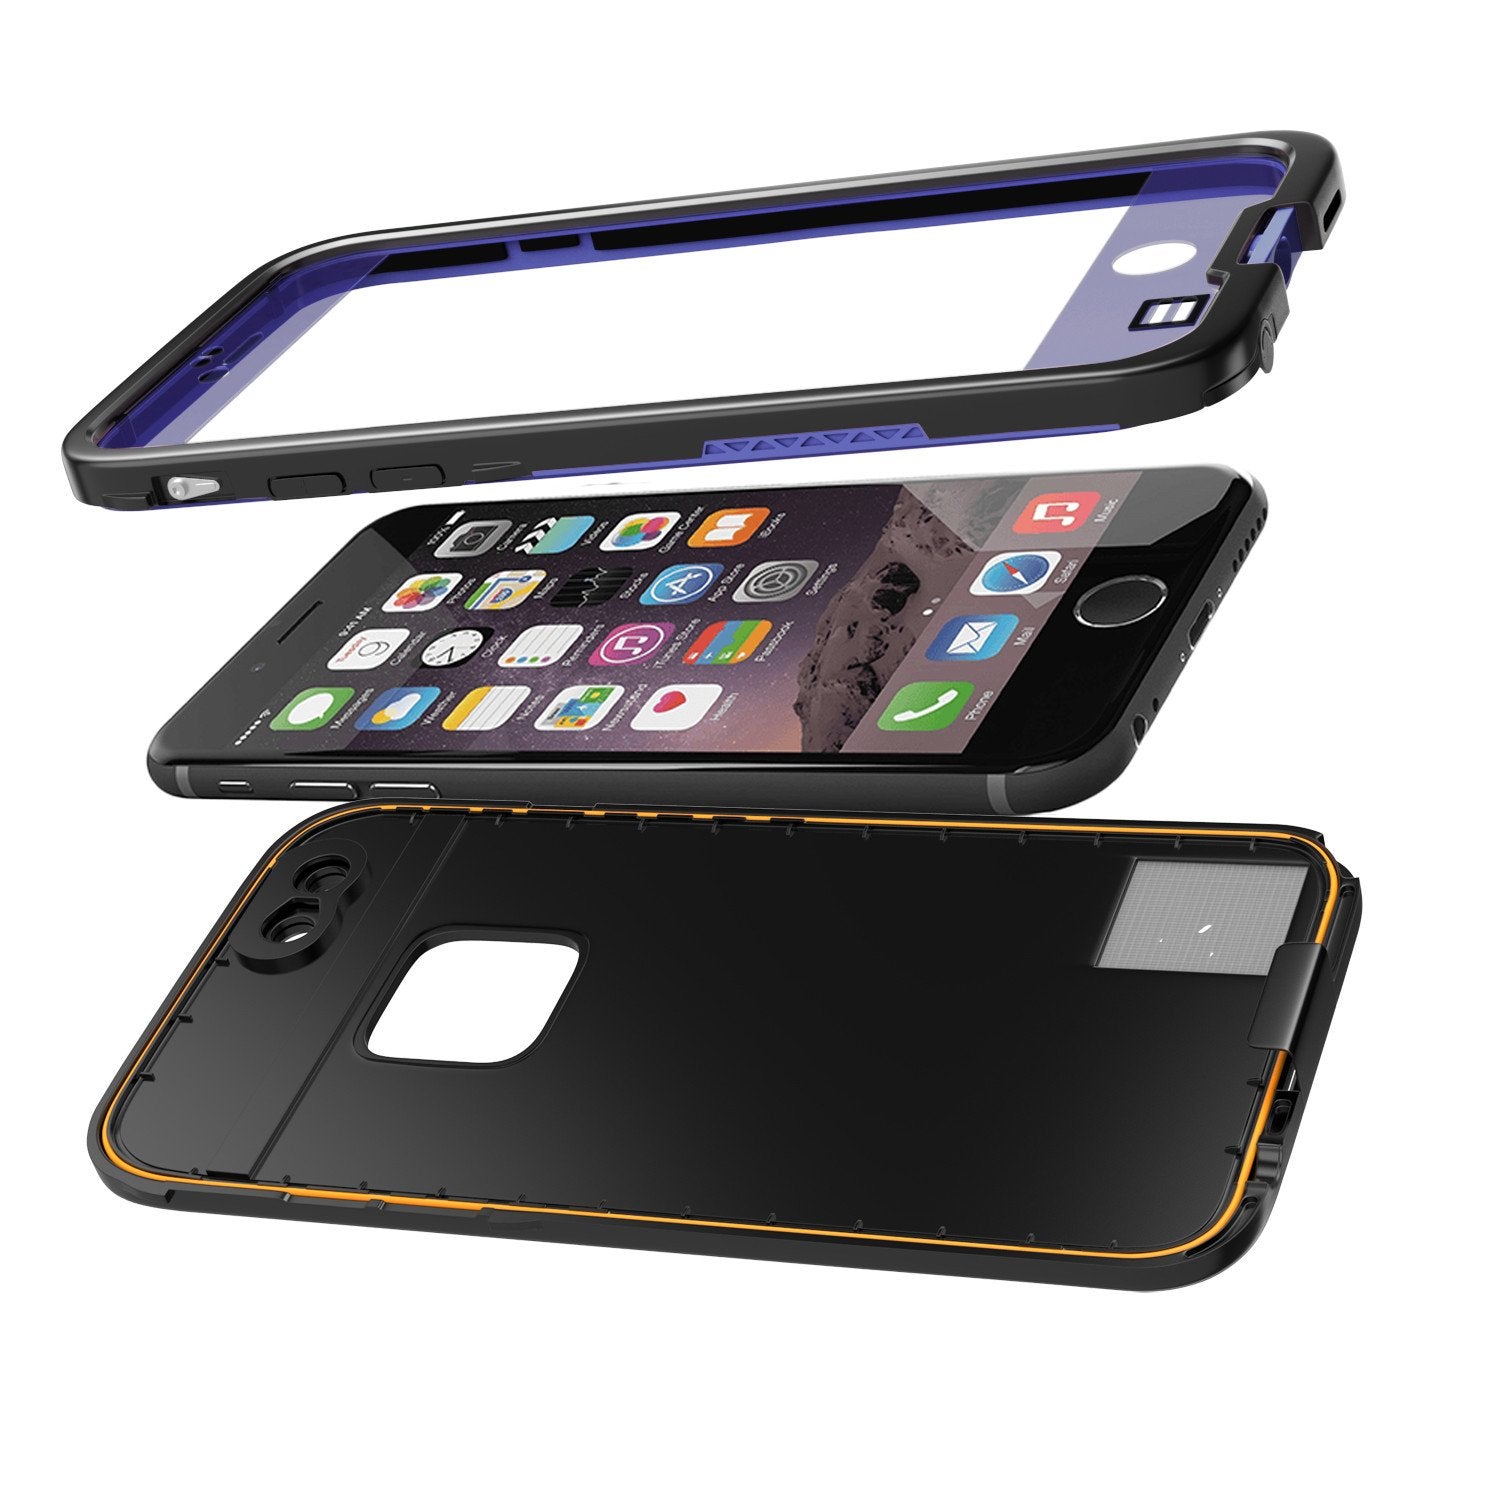 iPhone 6S+/6+ Plus Waterproof Case, Punkcase SpikeStar Purple Thin Fit 6.6ft Underwater IP68